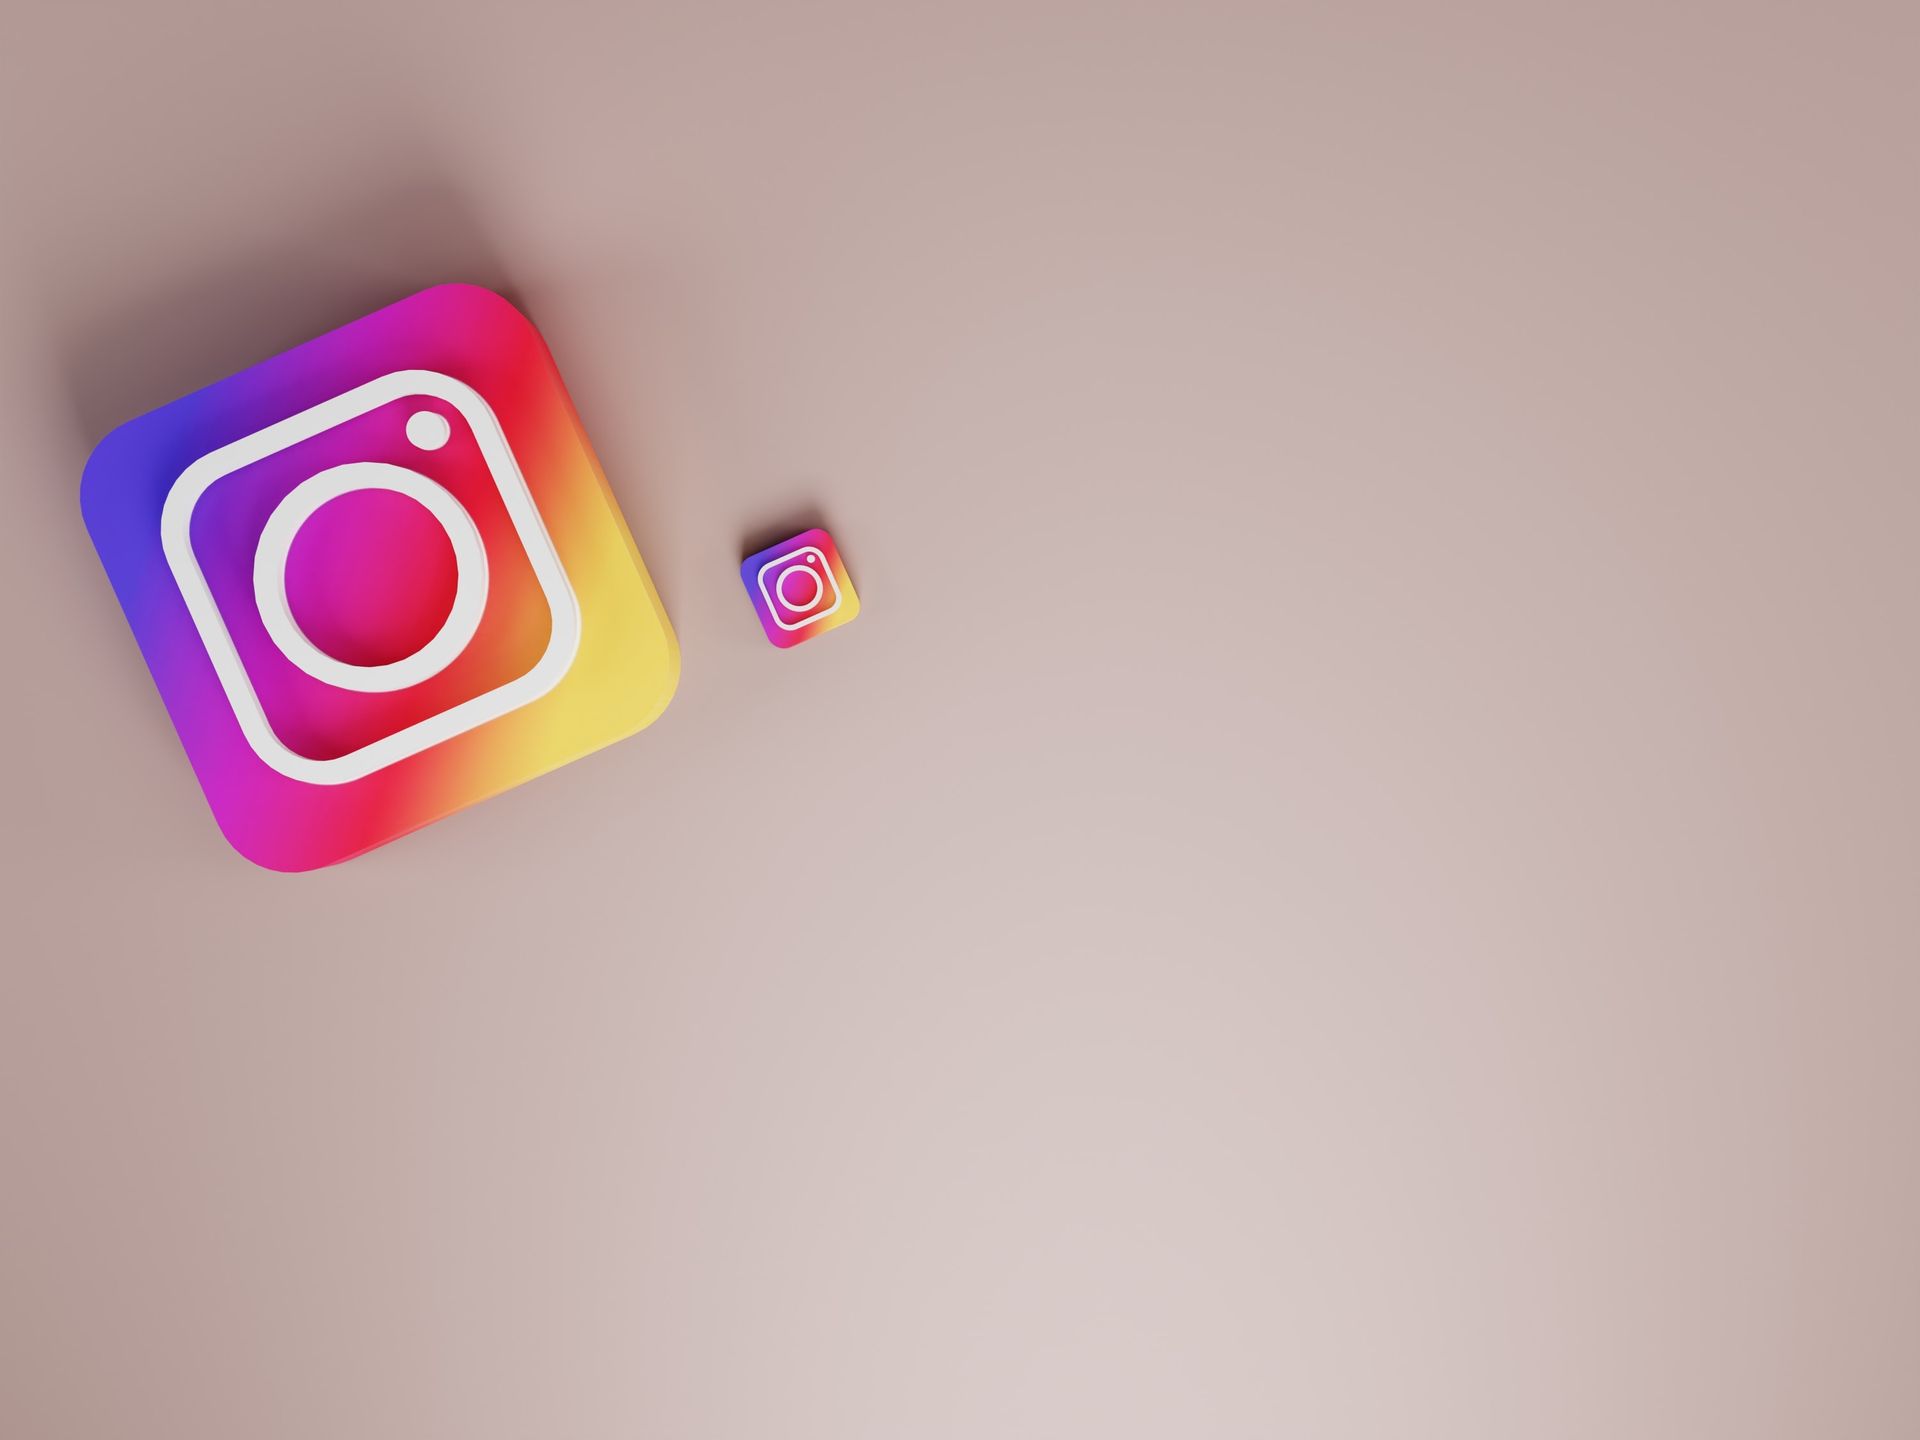 What is Instagram original name?